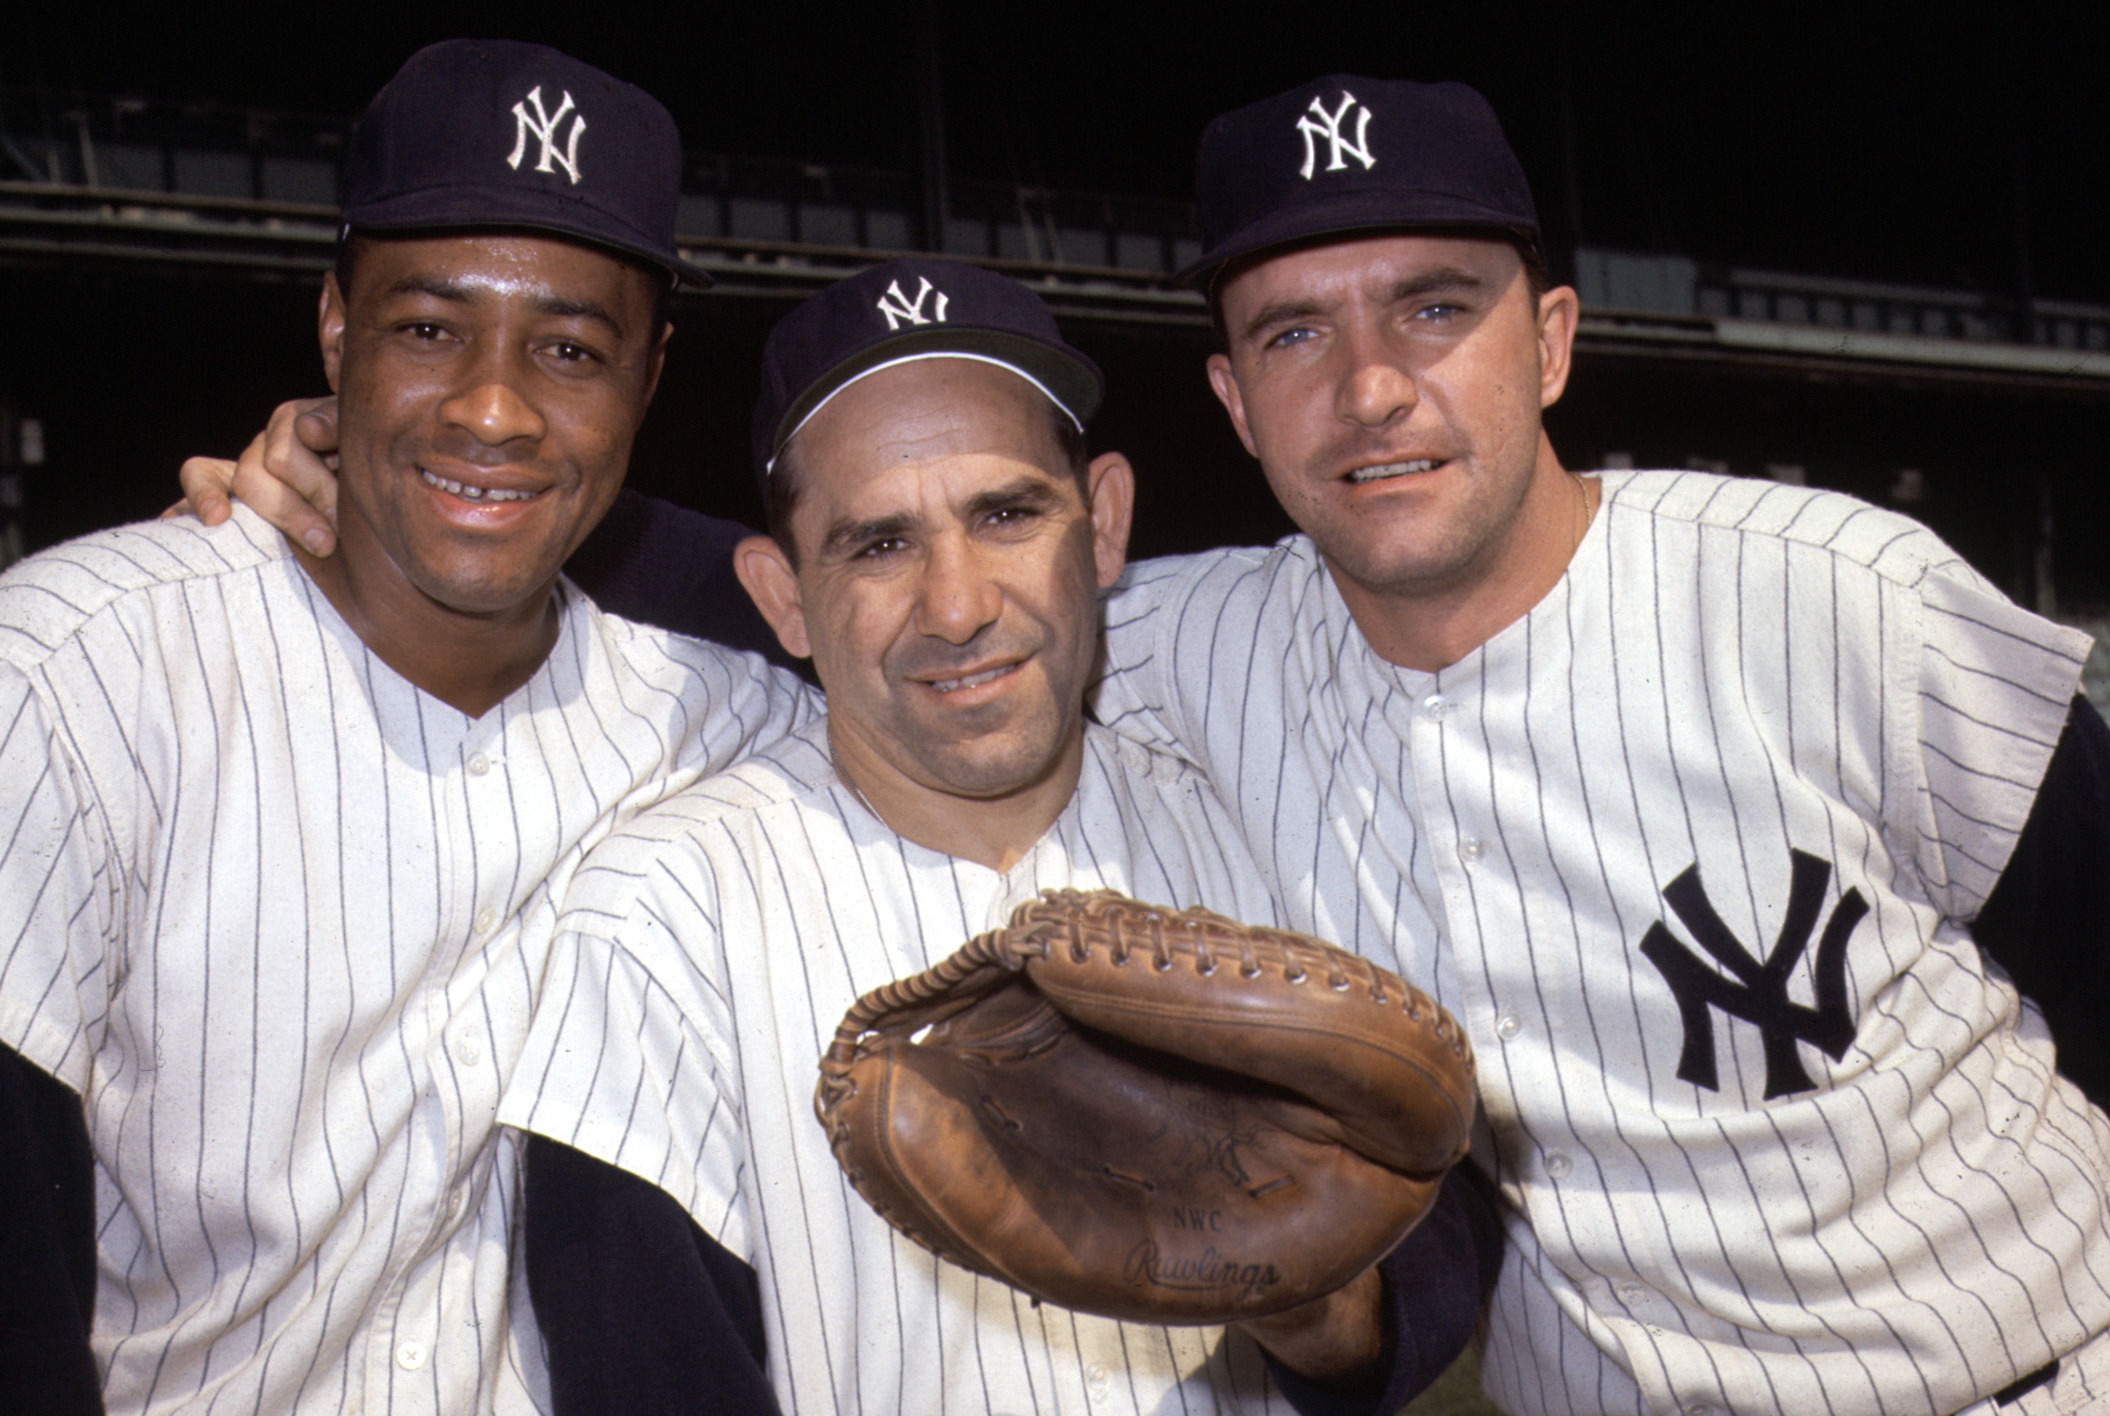  Yogi Berra Autographed Cream New York Yankees Jersey